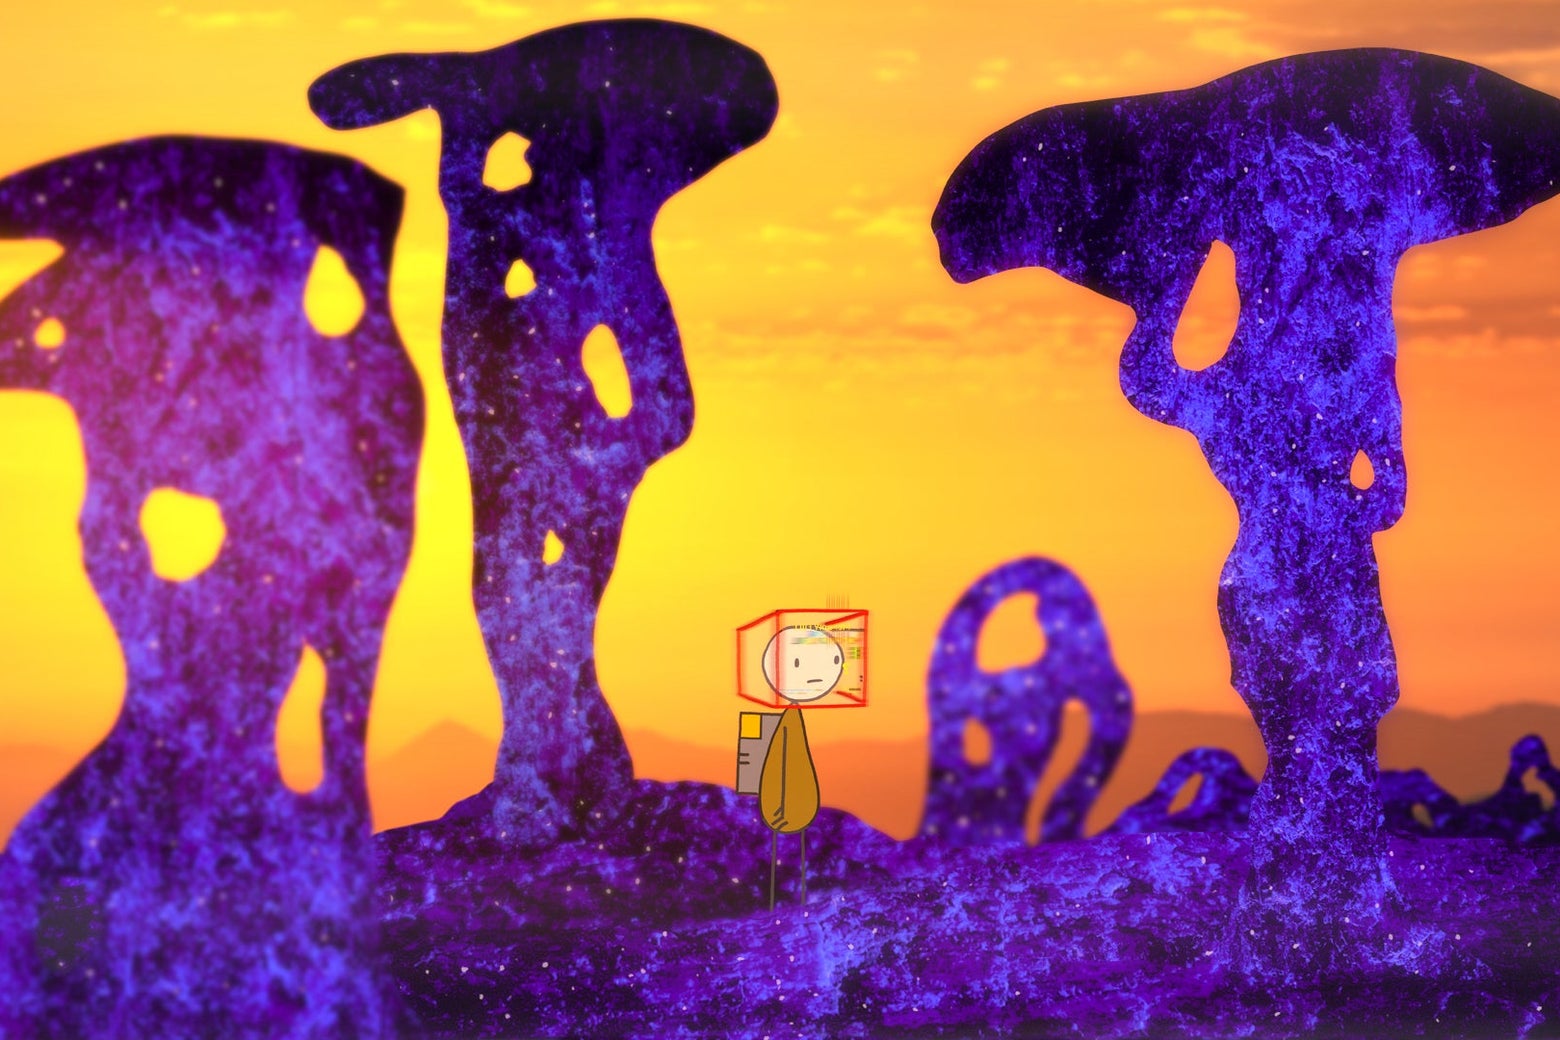 How Don Hertzfeldt made his apocalyptic stick figure animation